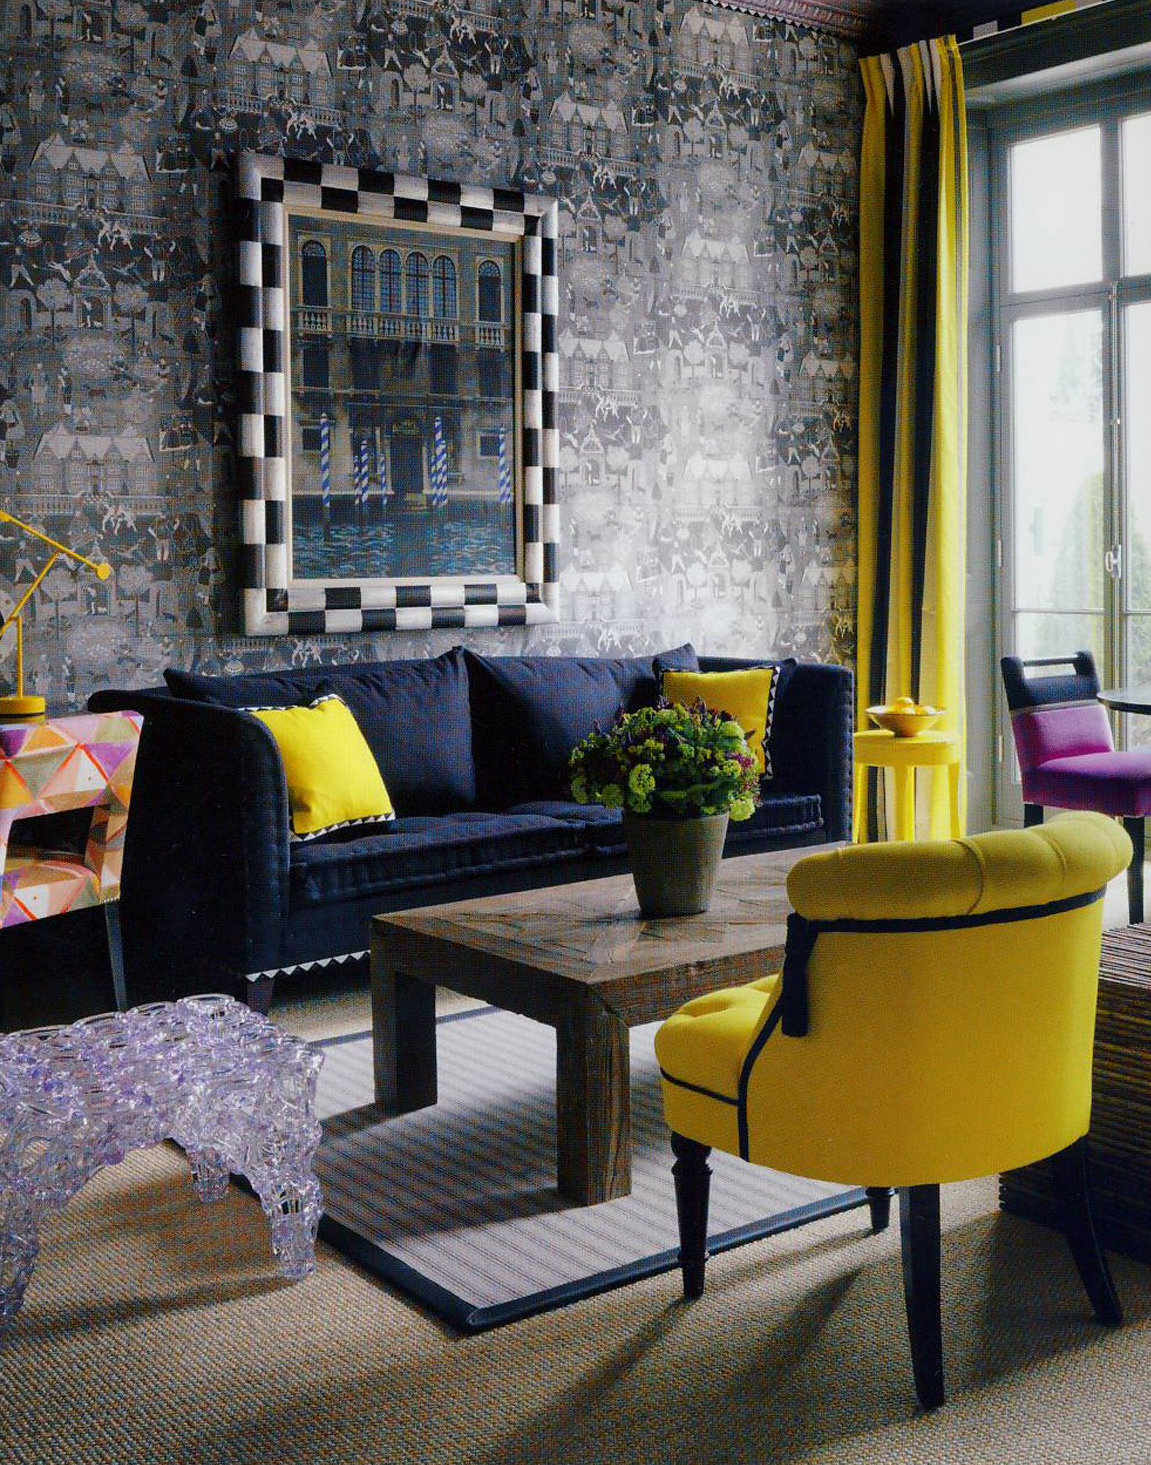 kit kemp living room interior design a living space black yellow